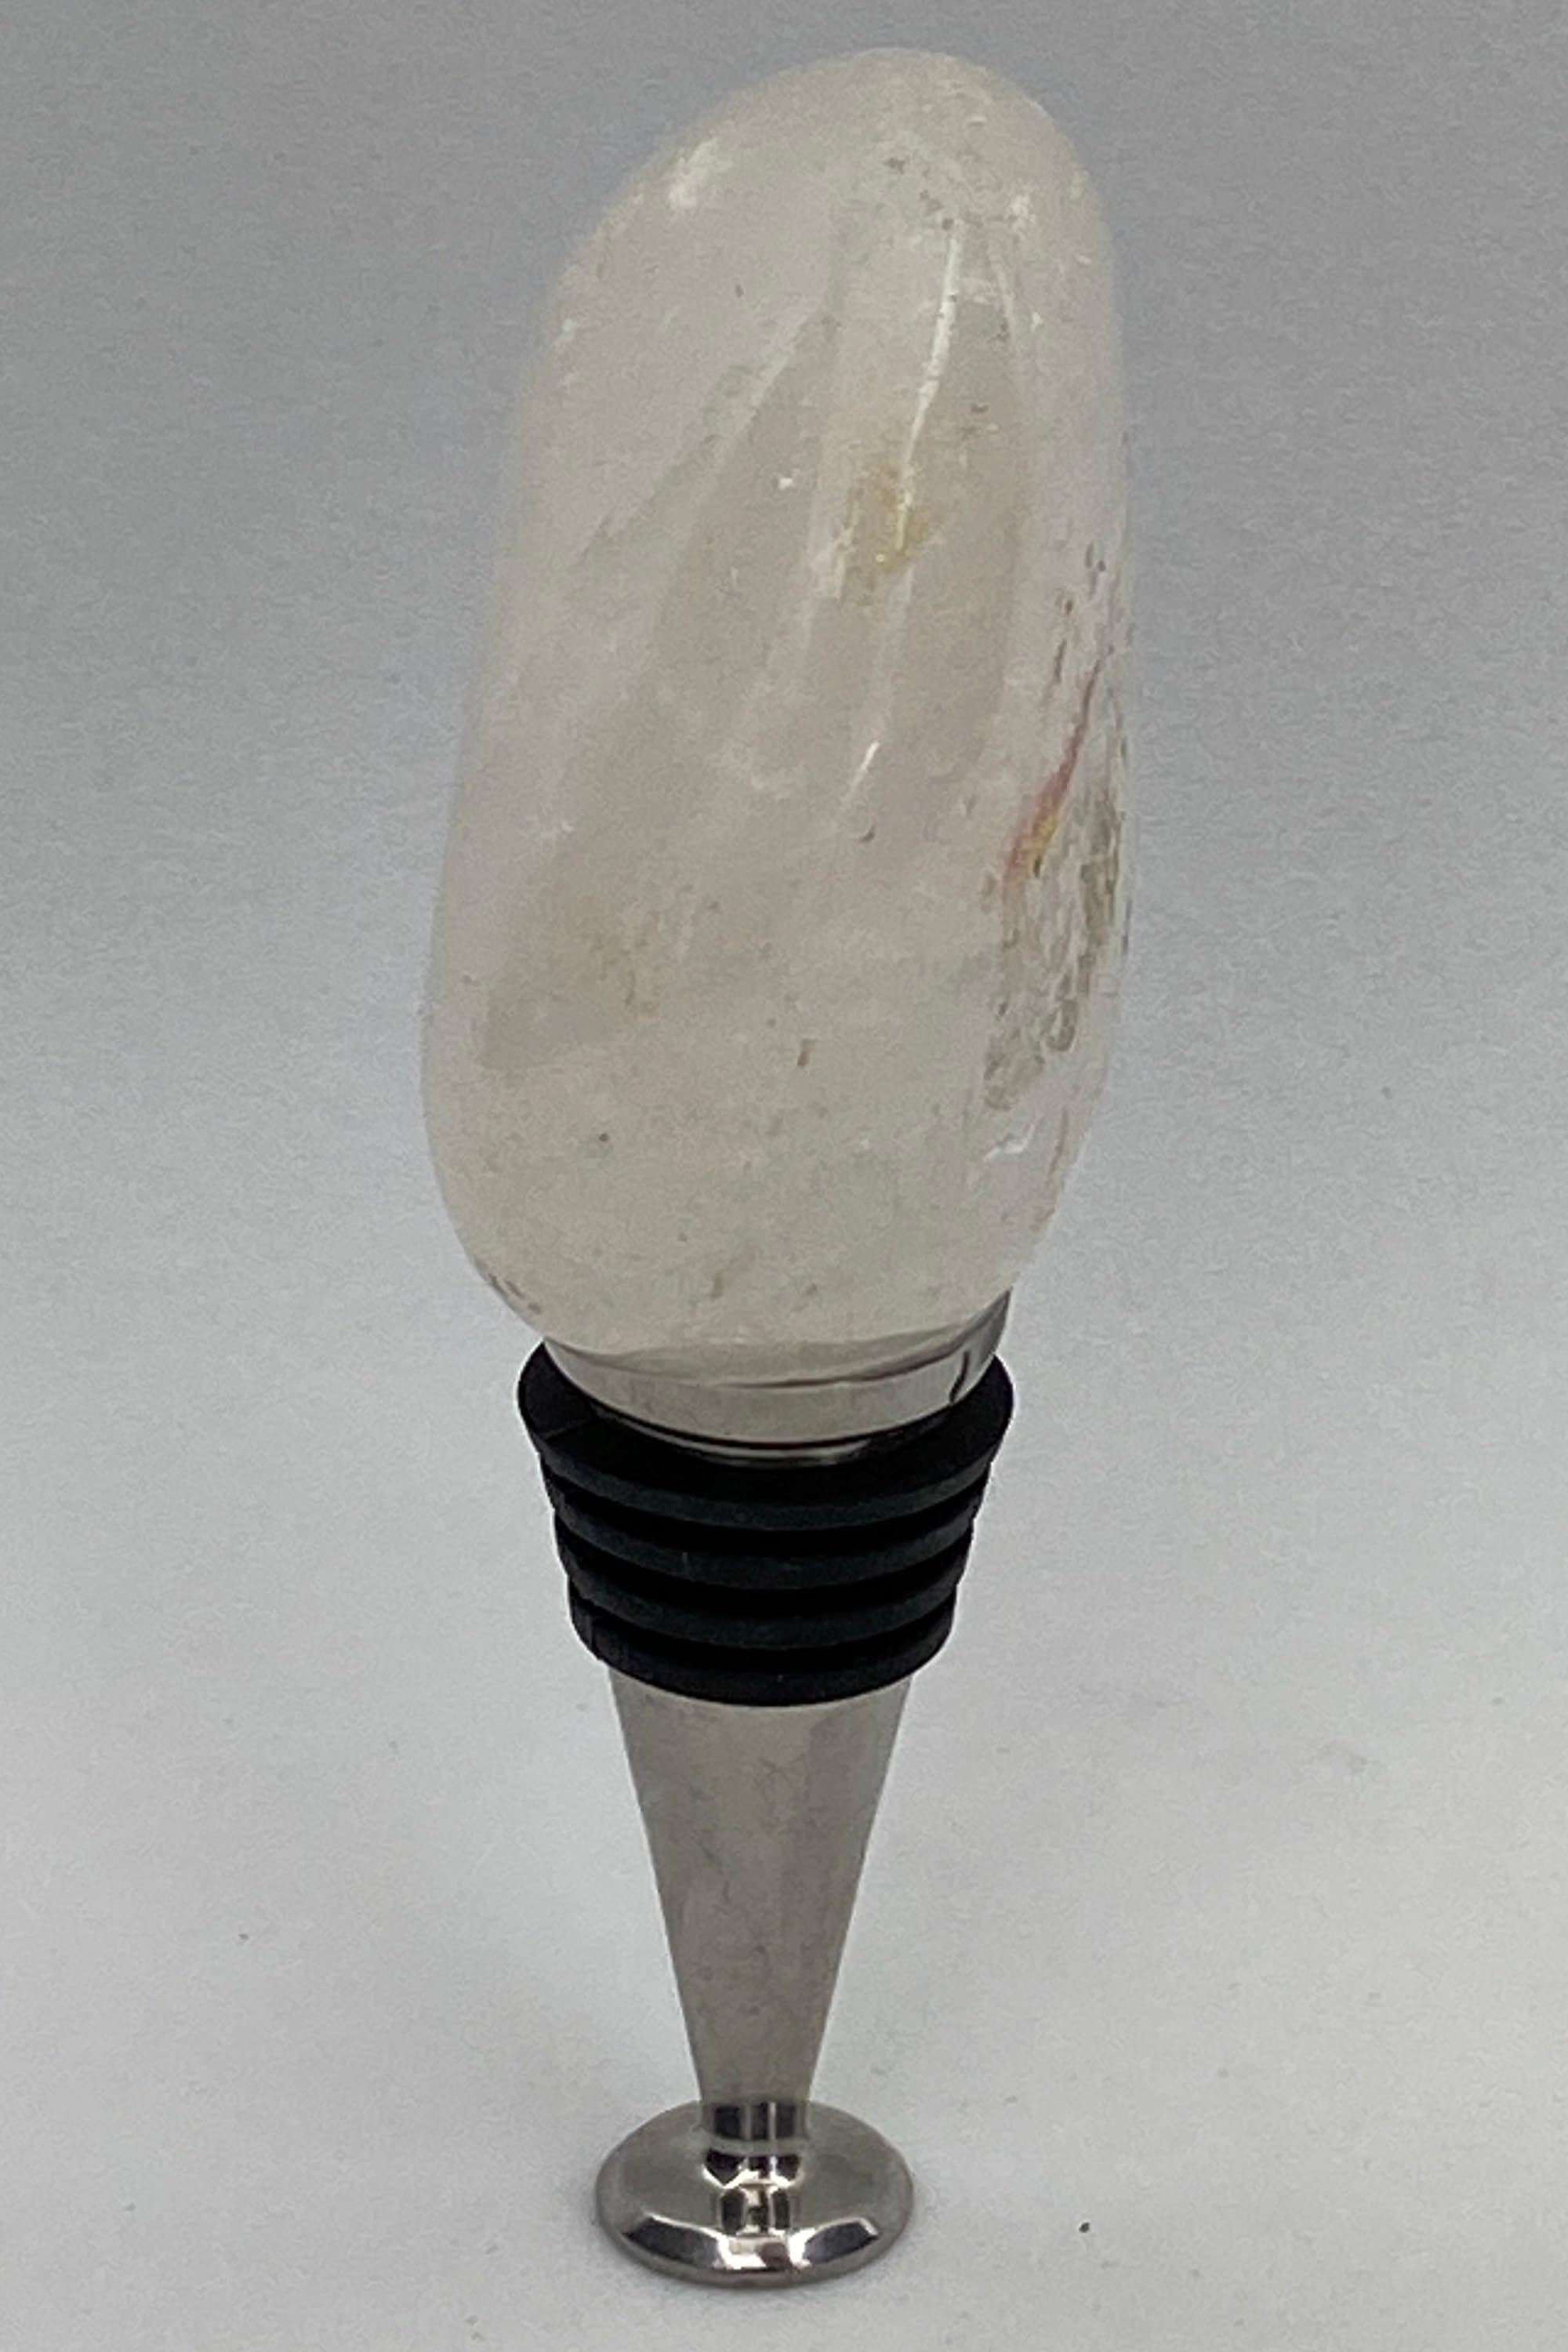 Wine bottle stopper made from tumbled quartz